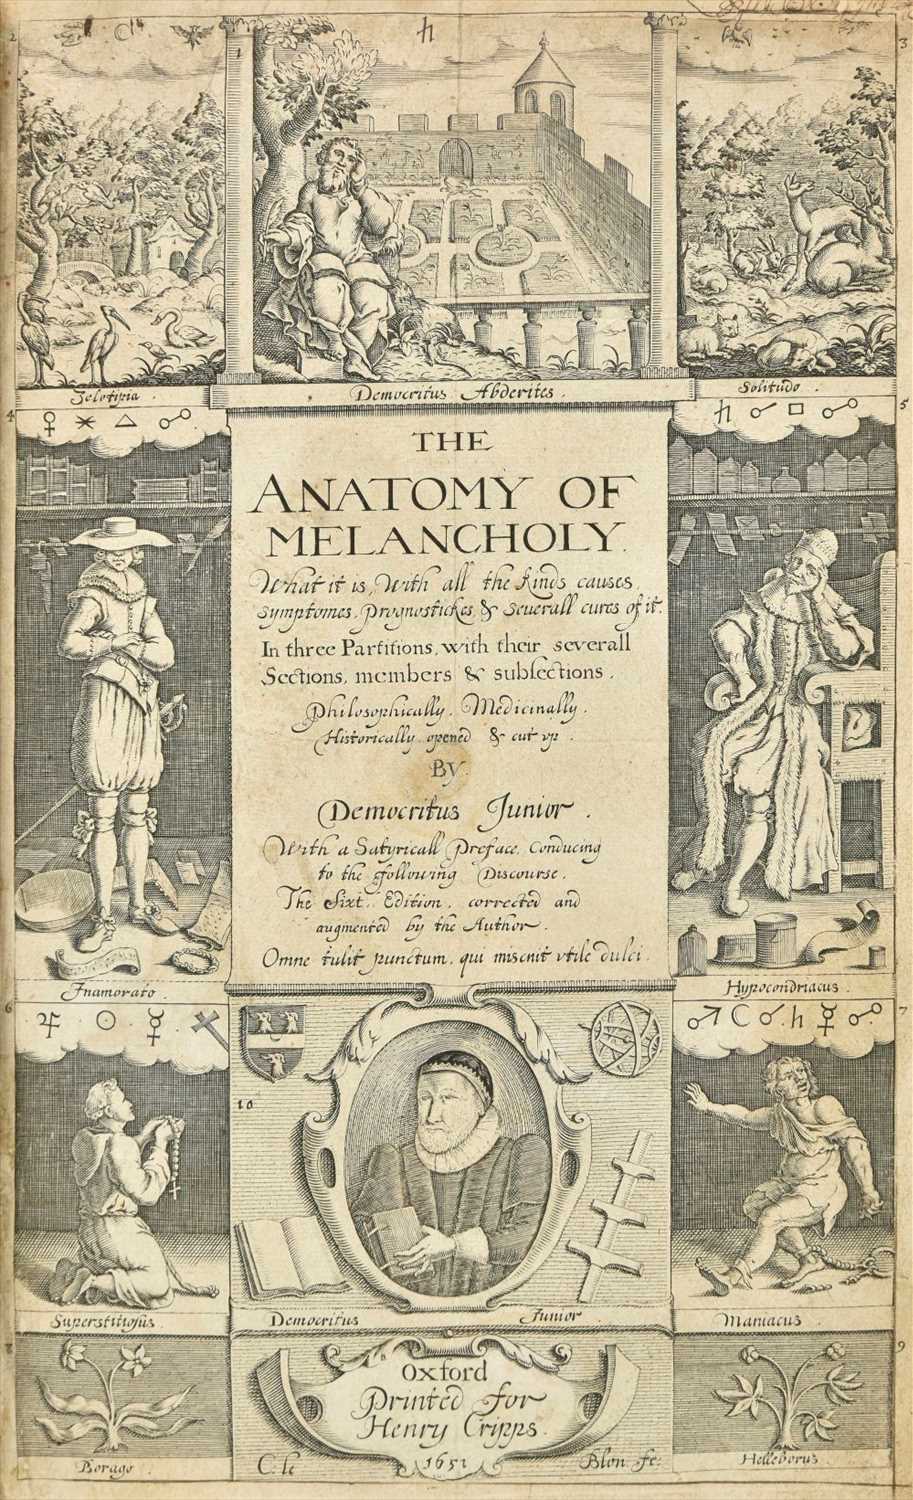 Lot 285 - Burton (Robert). The Anatomy of Melancholy, 6th edition, 1651